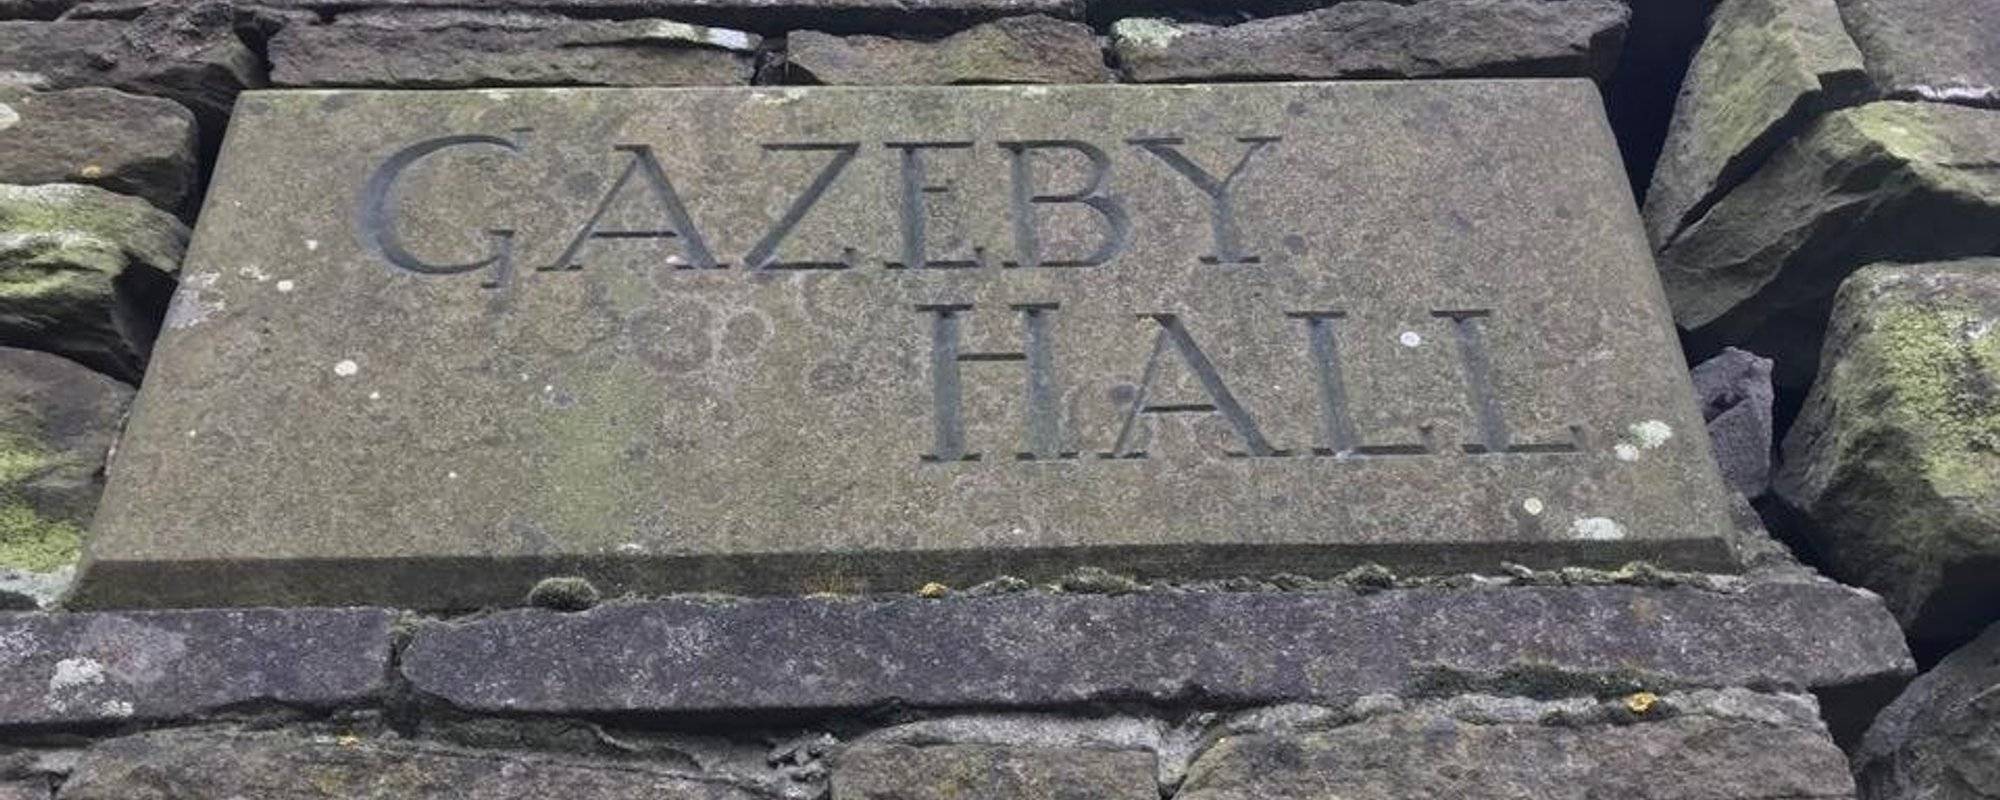 Tales of the Urban Explorer: Gazeby Hall